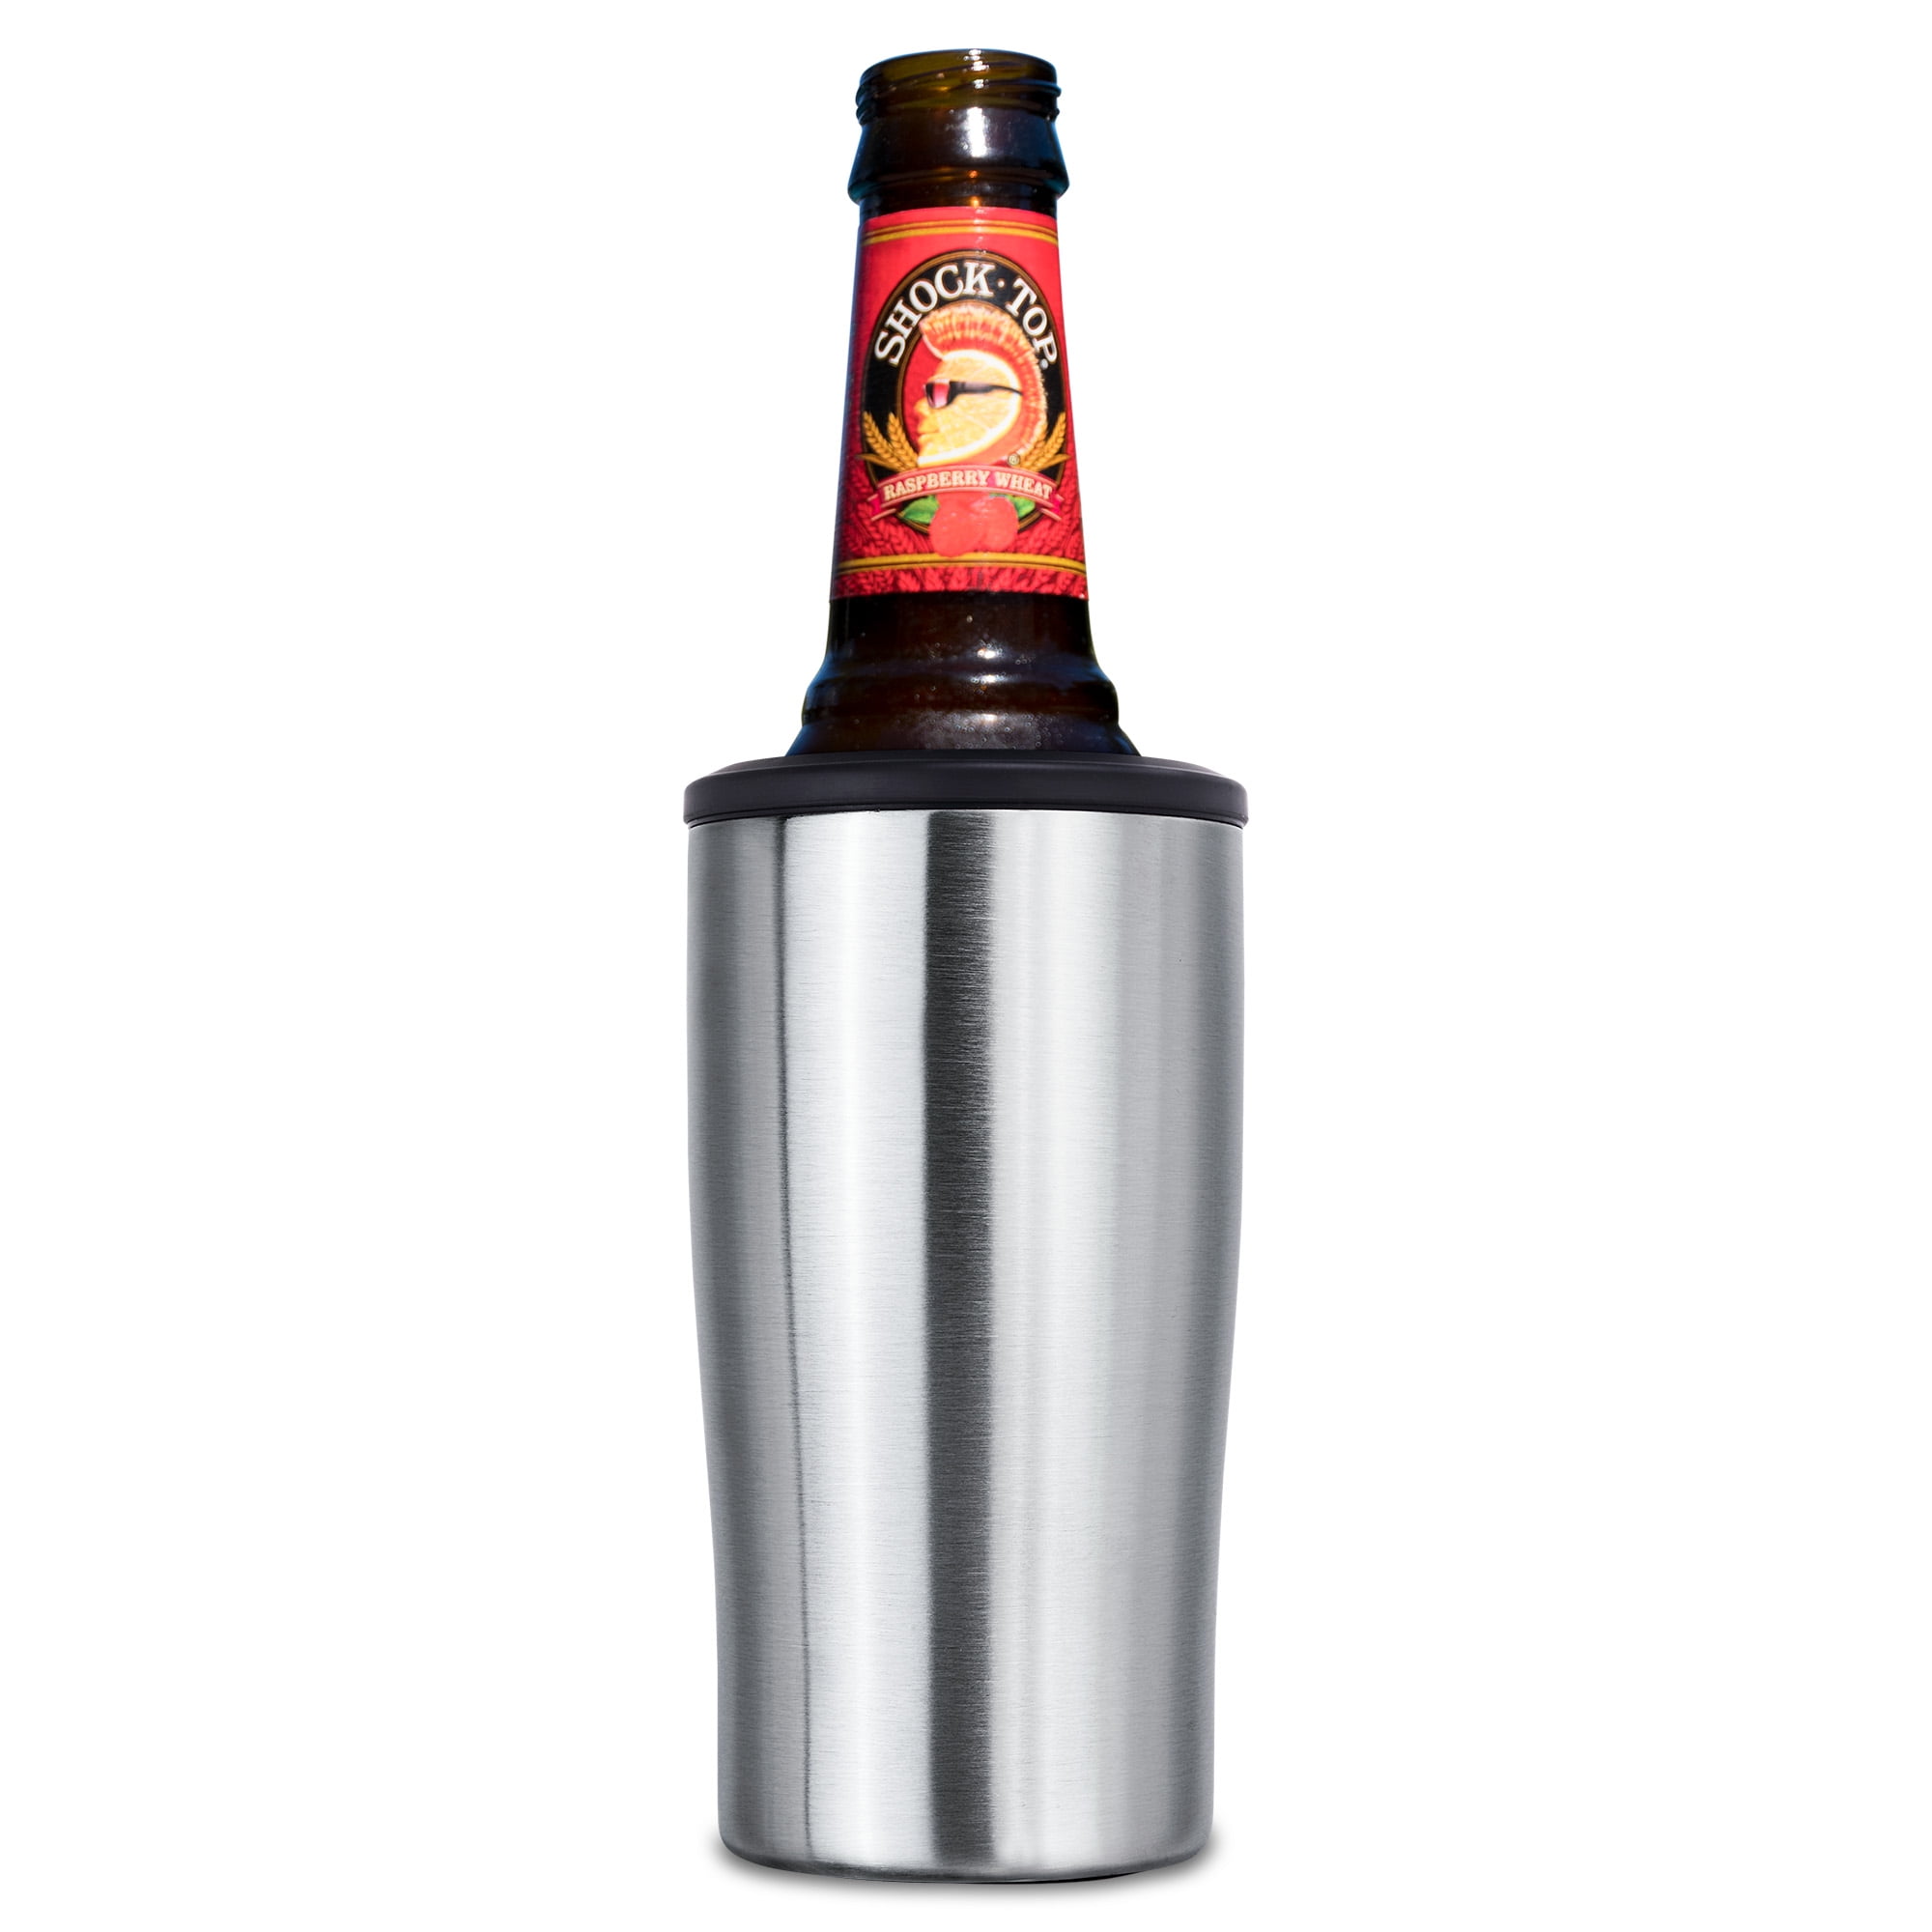 4 in 1 Vacuum Insulated Stainless Steel Beer Bottle Cold Keeper, Can Cooler,  Bottle Holder for Women/Men, Insulator for 12 Ounce Standard/Tall Skinny  Slim Cans, Beer Bottles, Black 